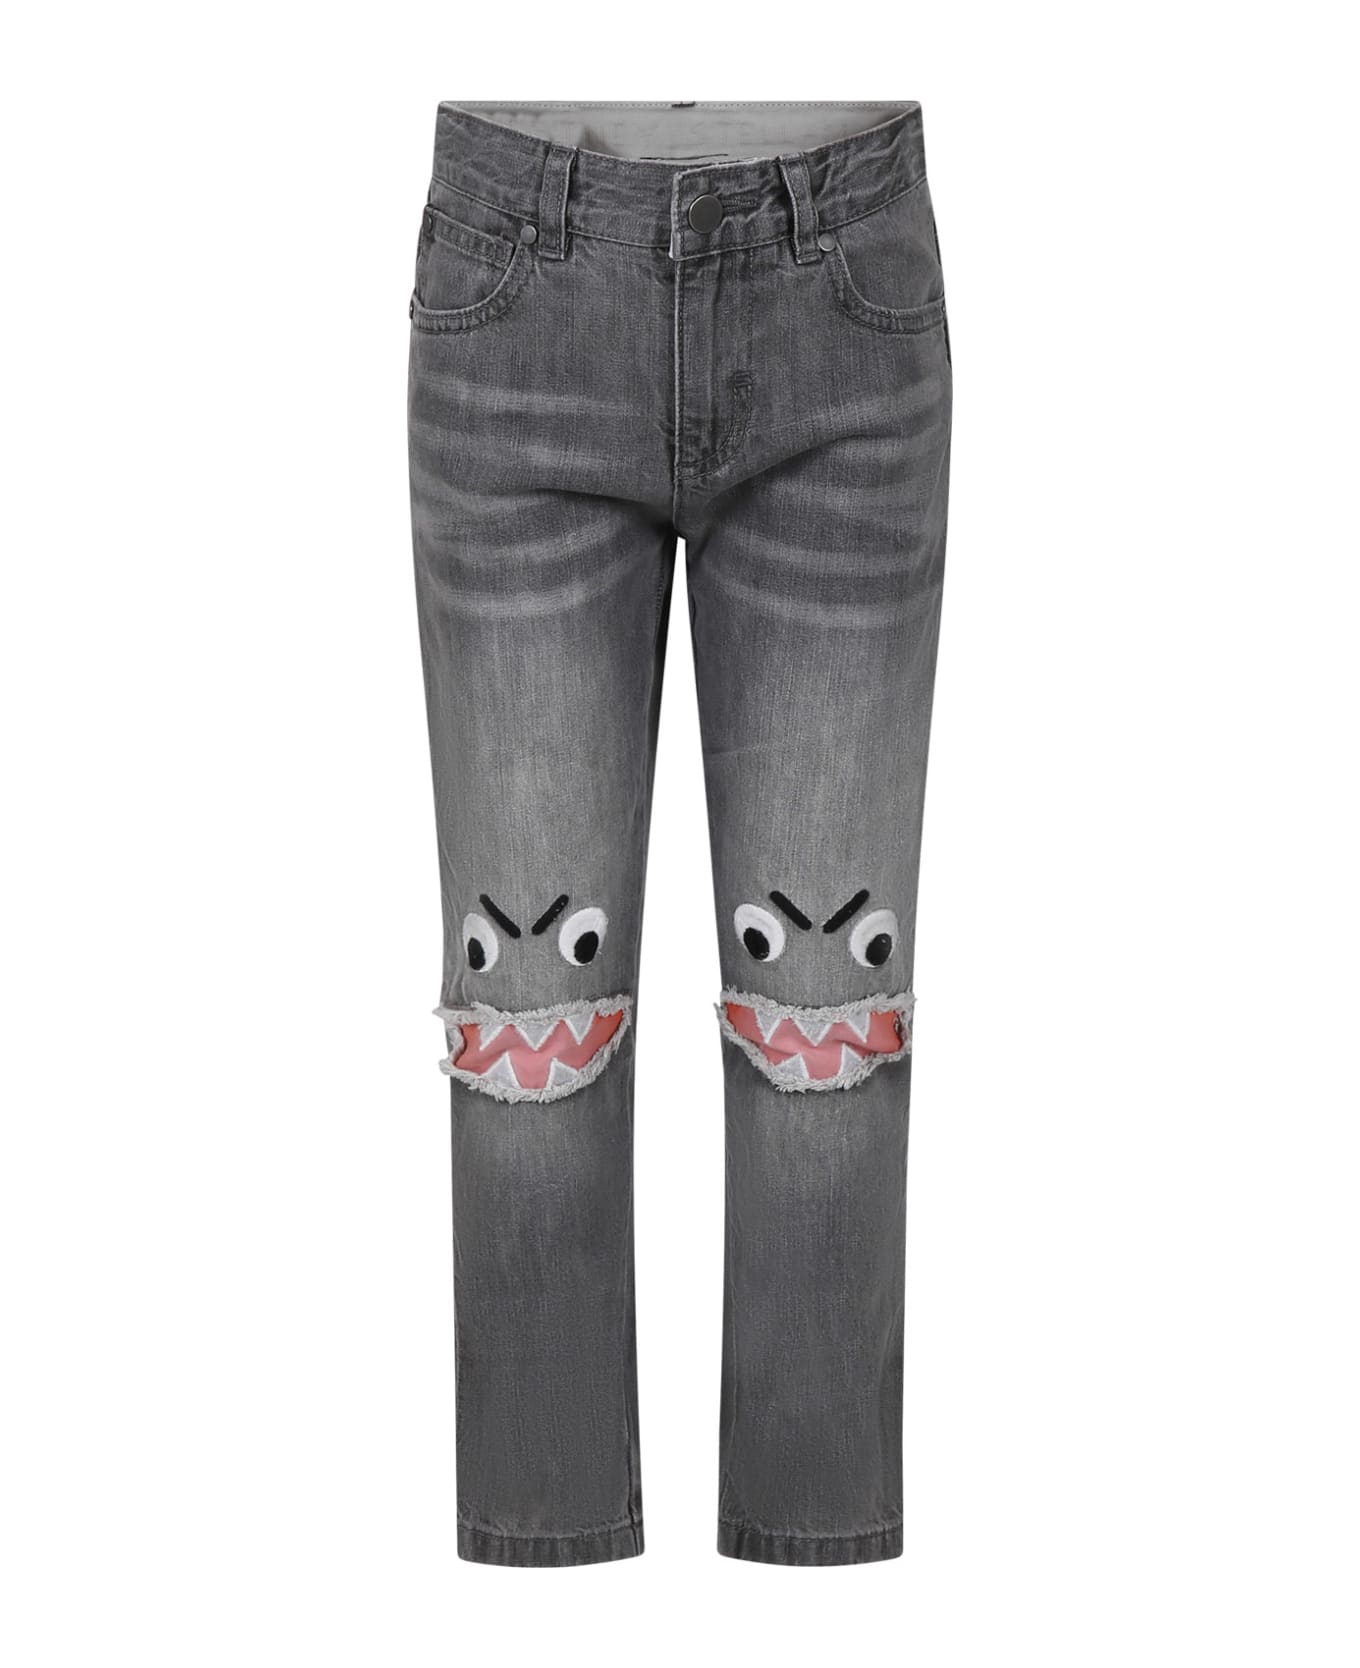 Stella McCartney Kids Grey Jeans For Boy With Shark - Grey ボトムス